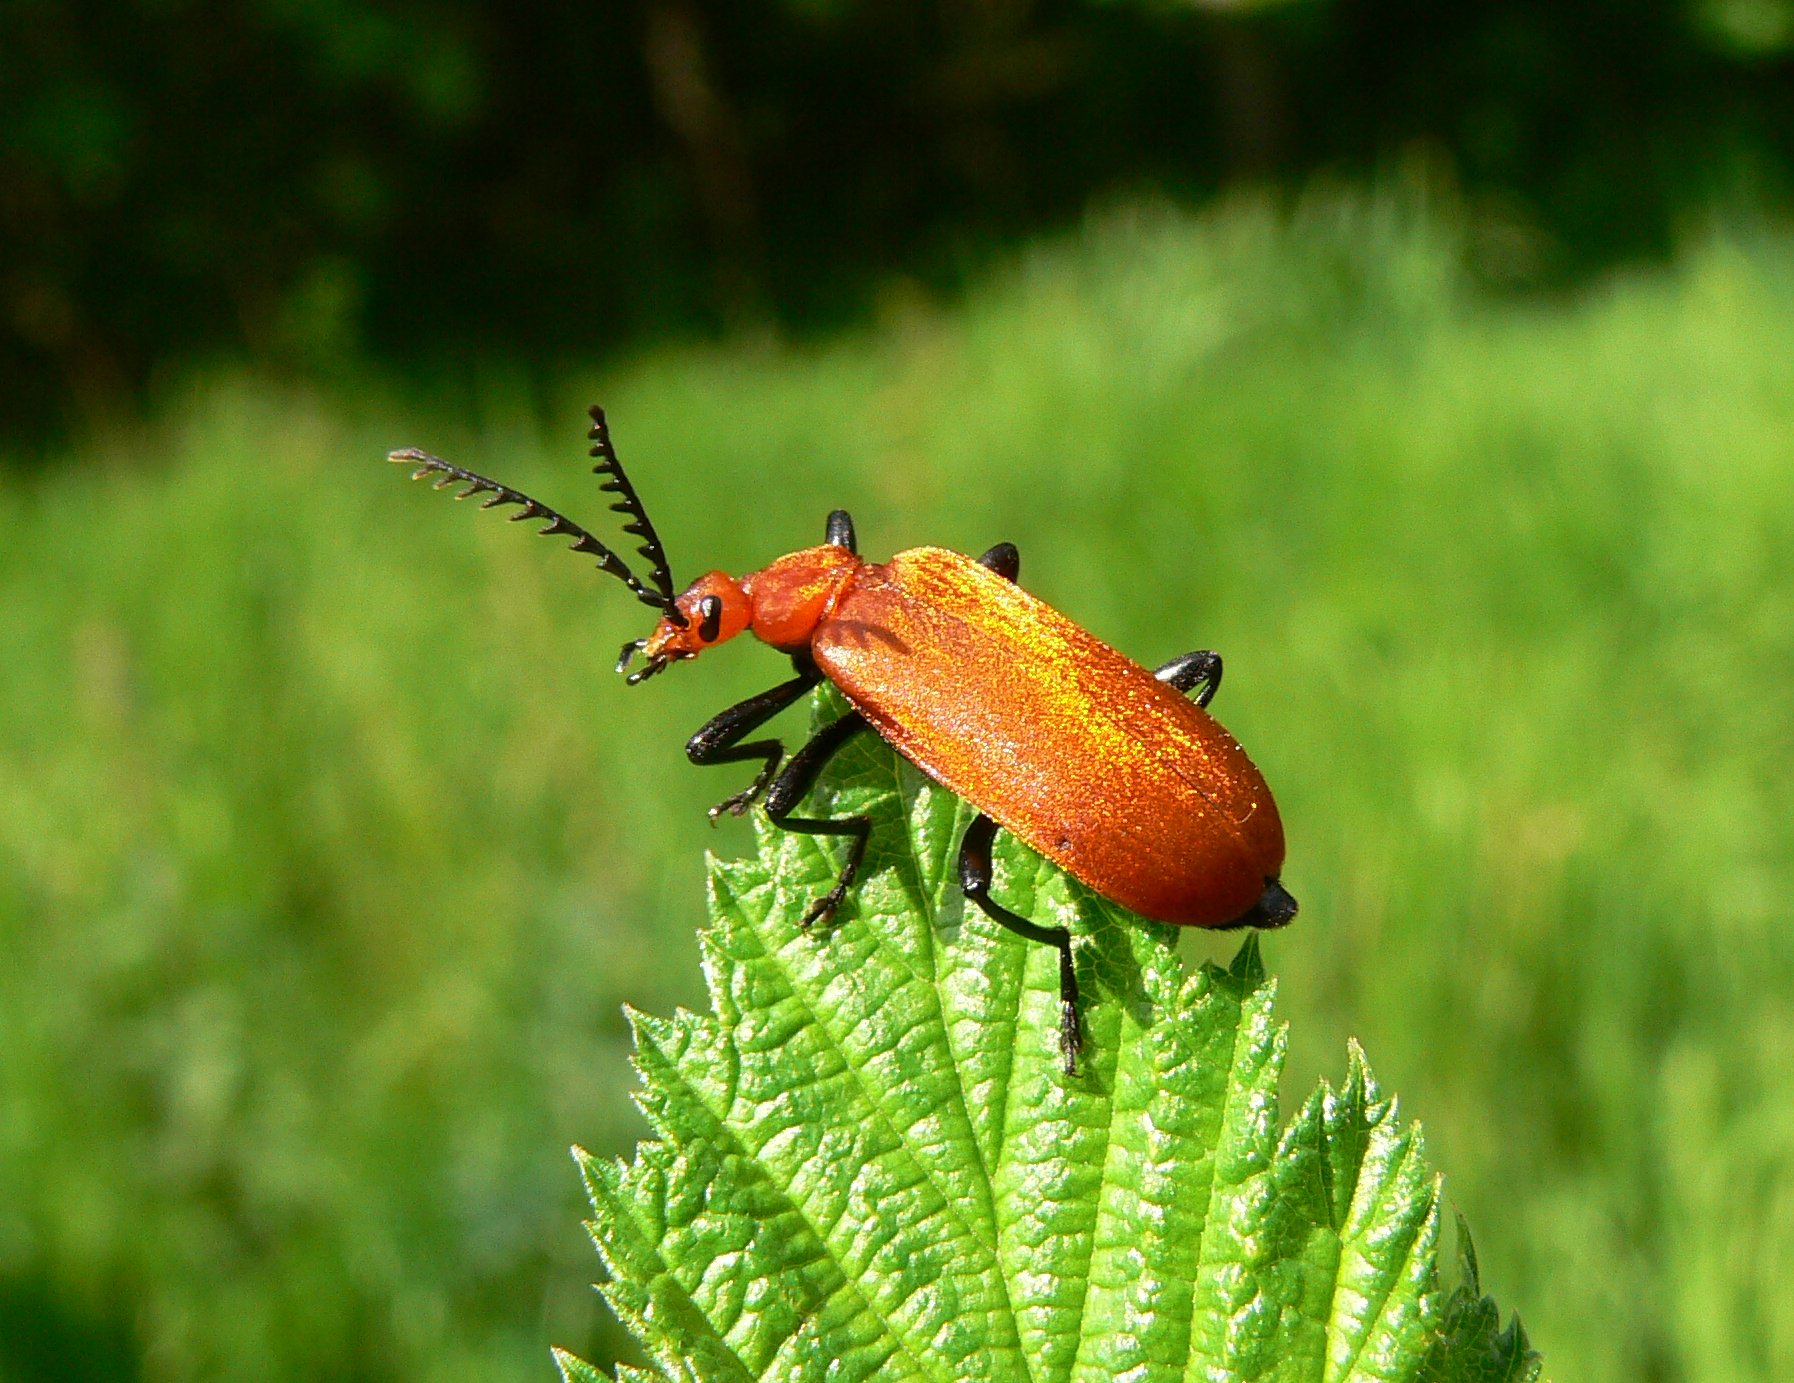 Pyrochroa serraticornis: The Cardinal Beetle